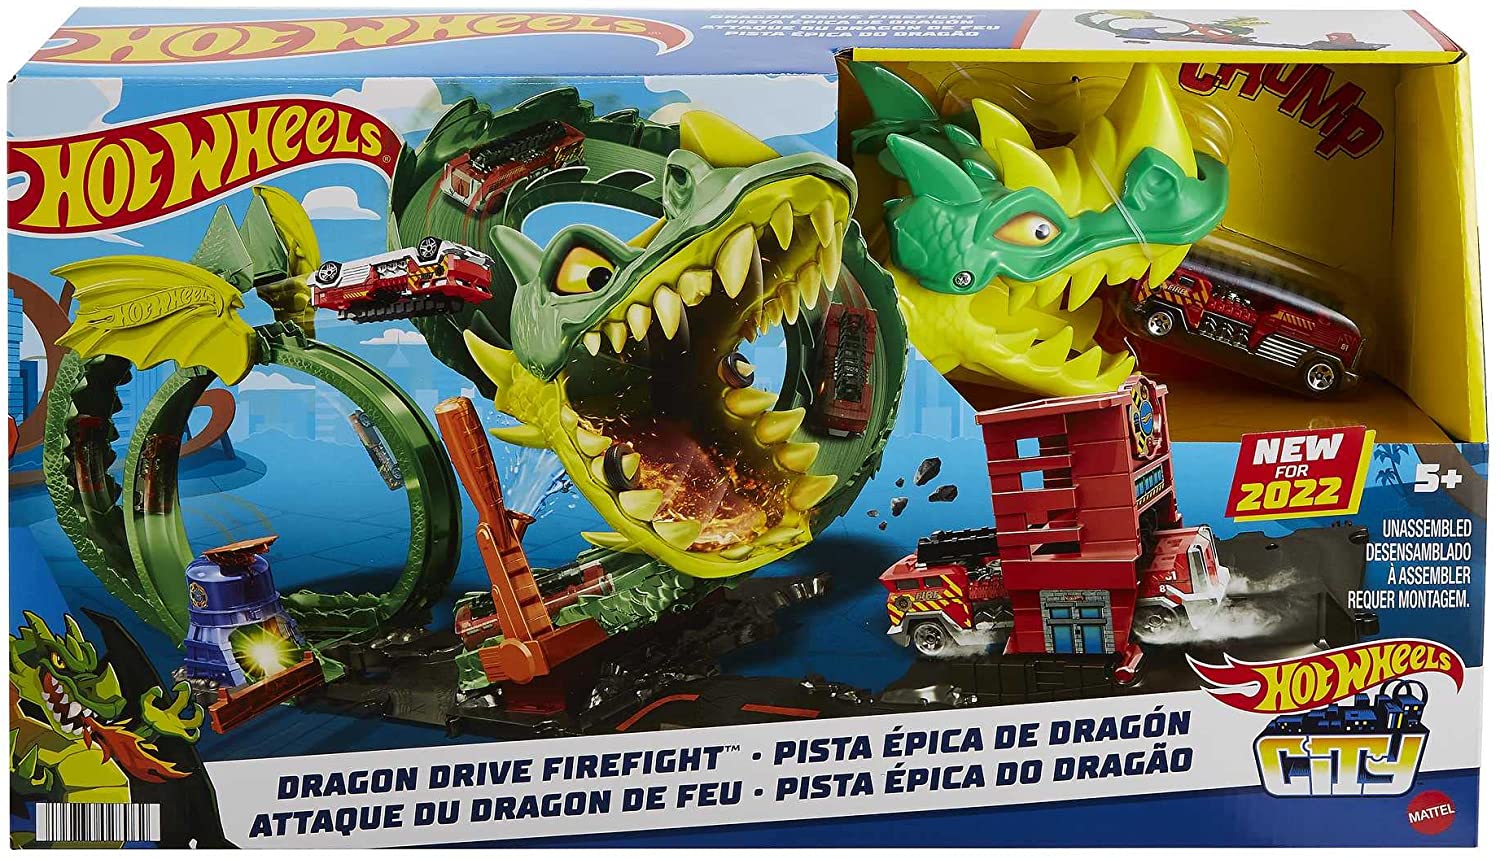 Dragon Drive Firefight